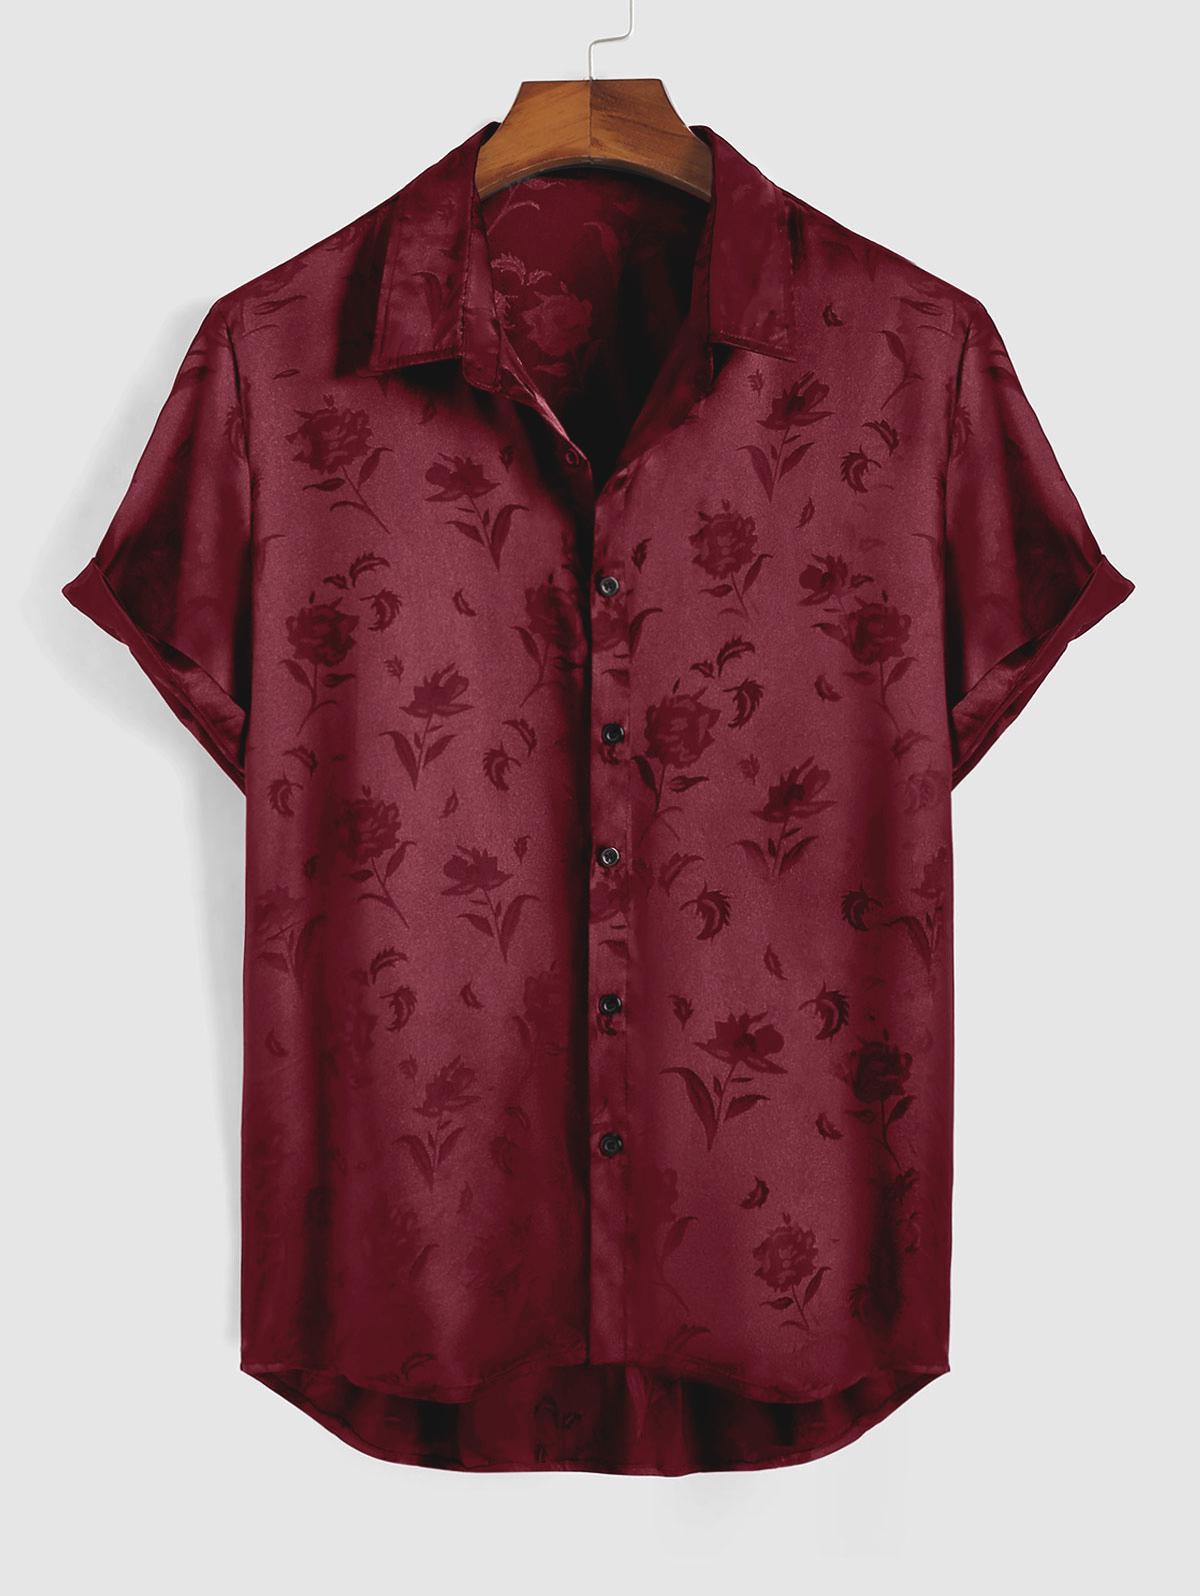 ZAFUL Men's Jacquard Silky Short Sleeve Shirt L Deep red